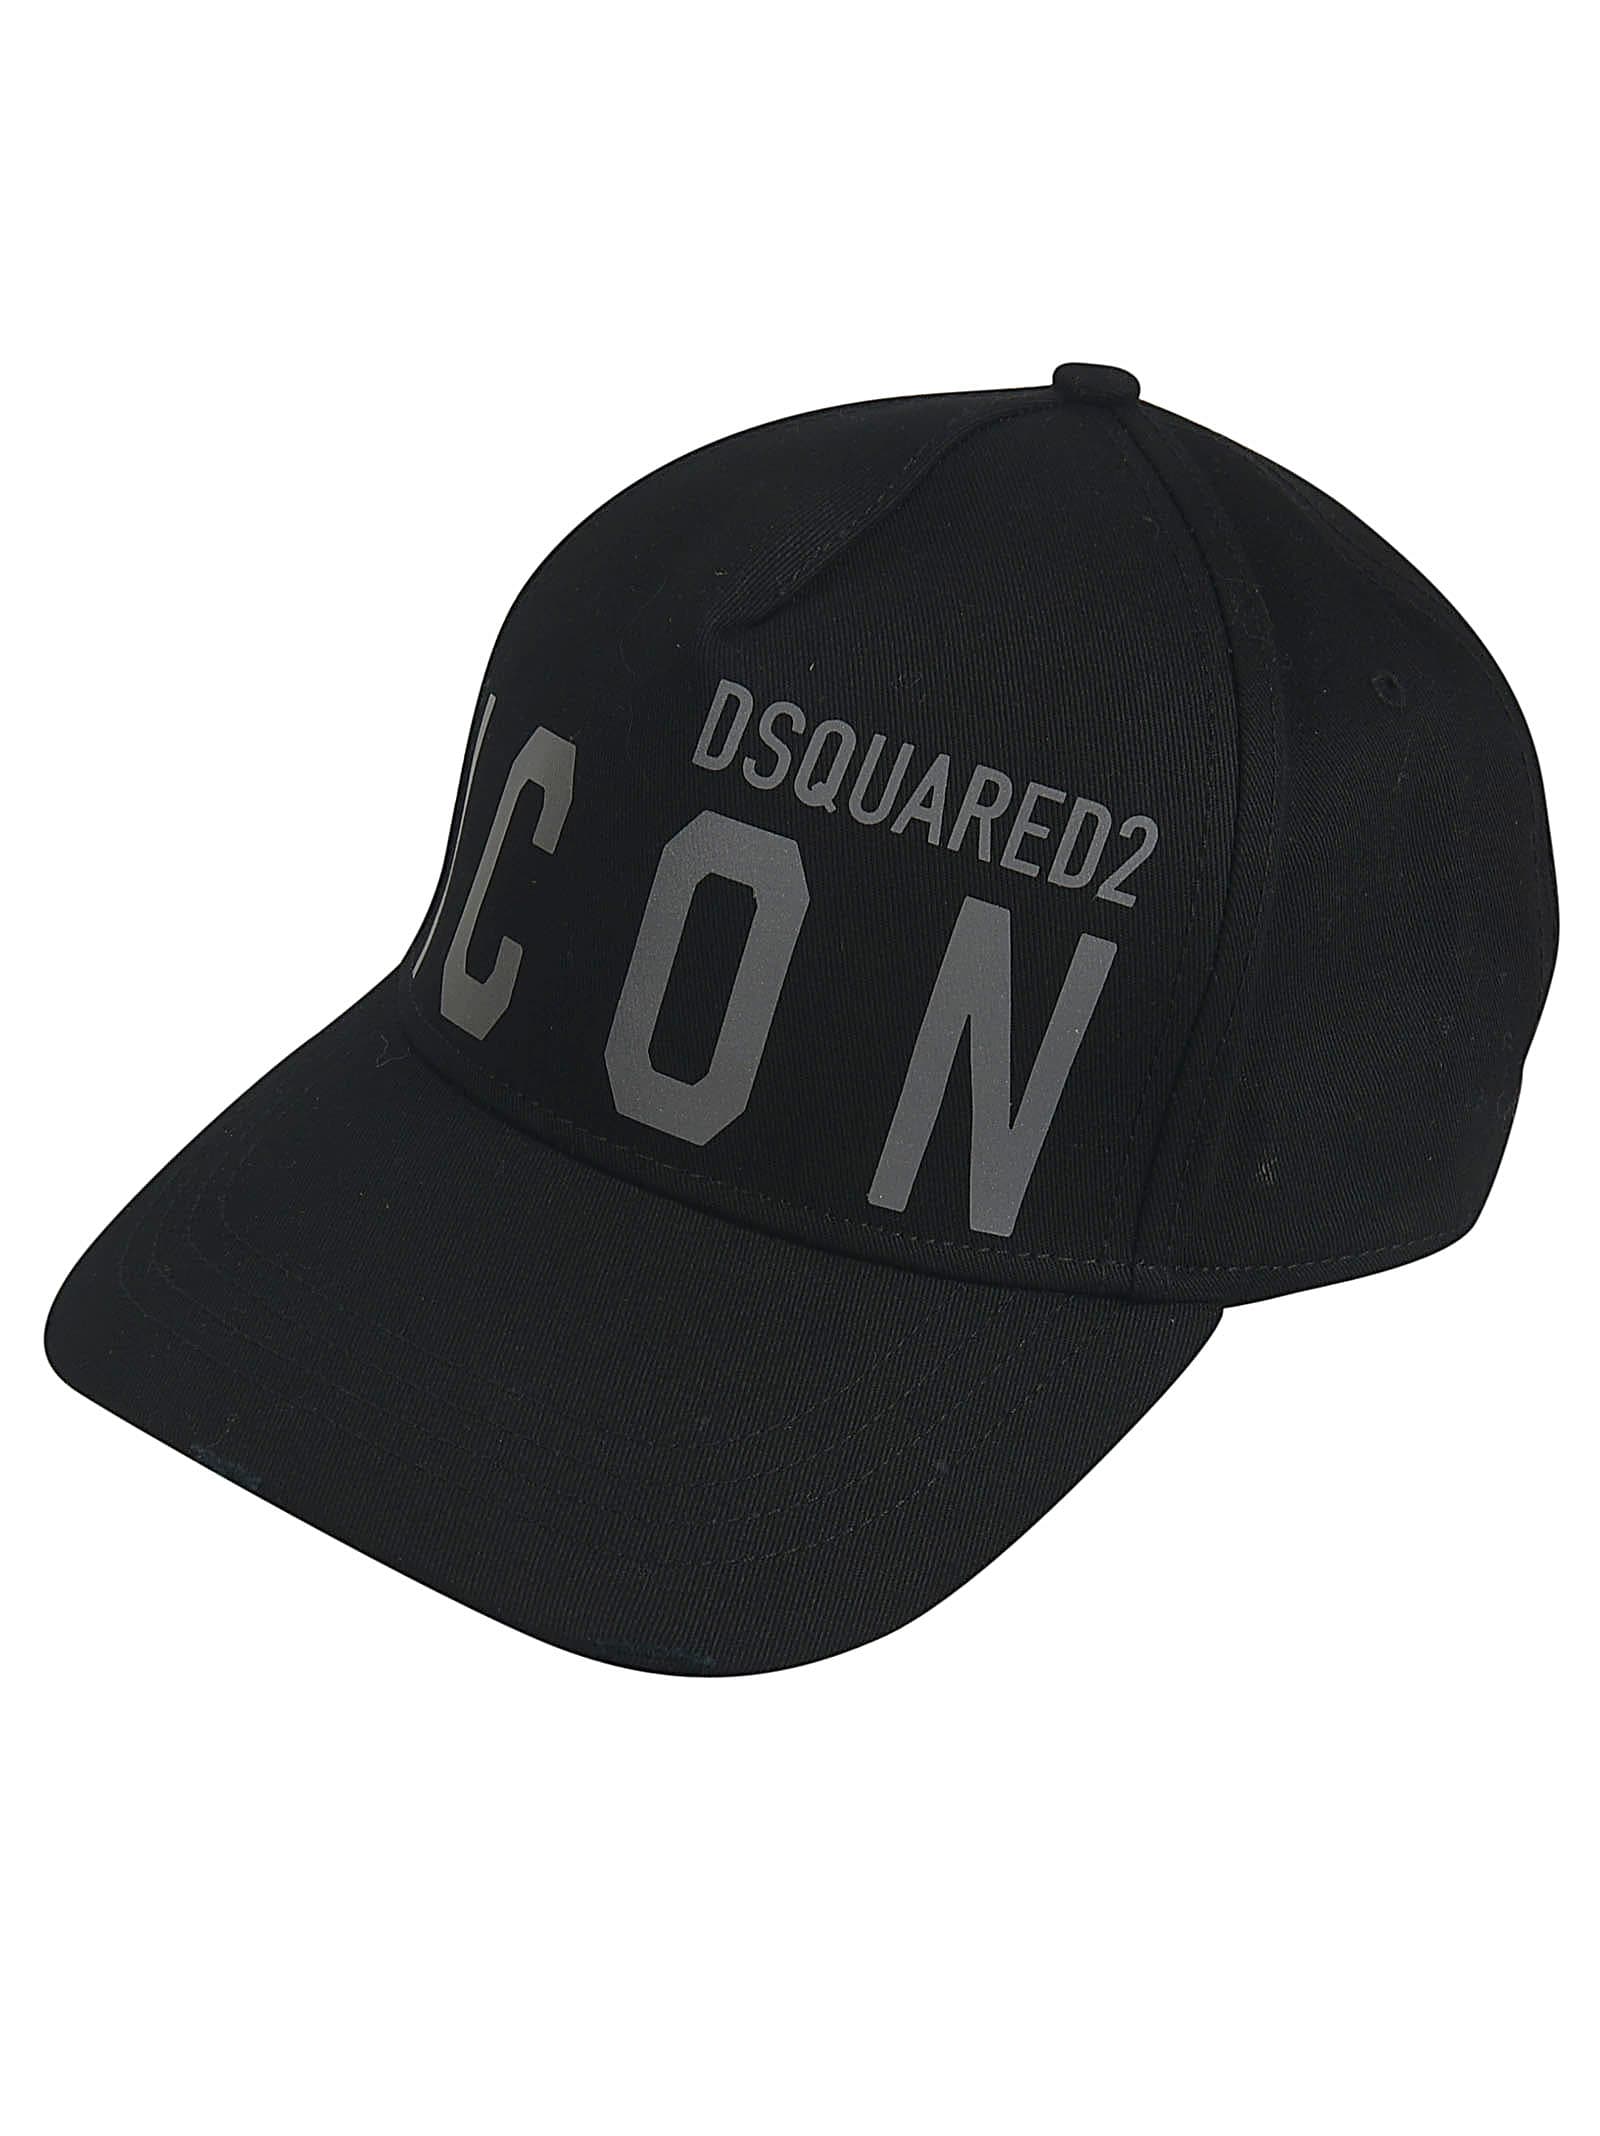 Dsquared2 ICON Printed Baseball Cap